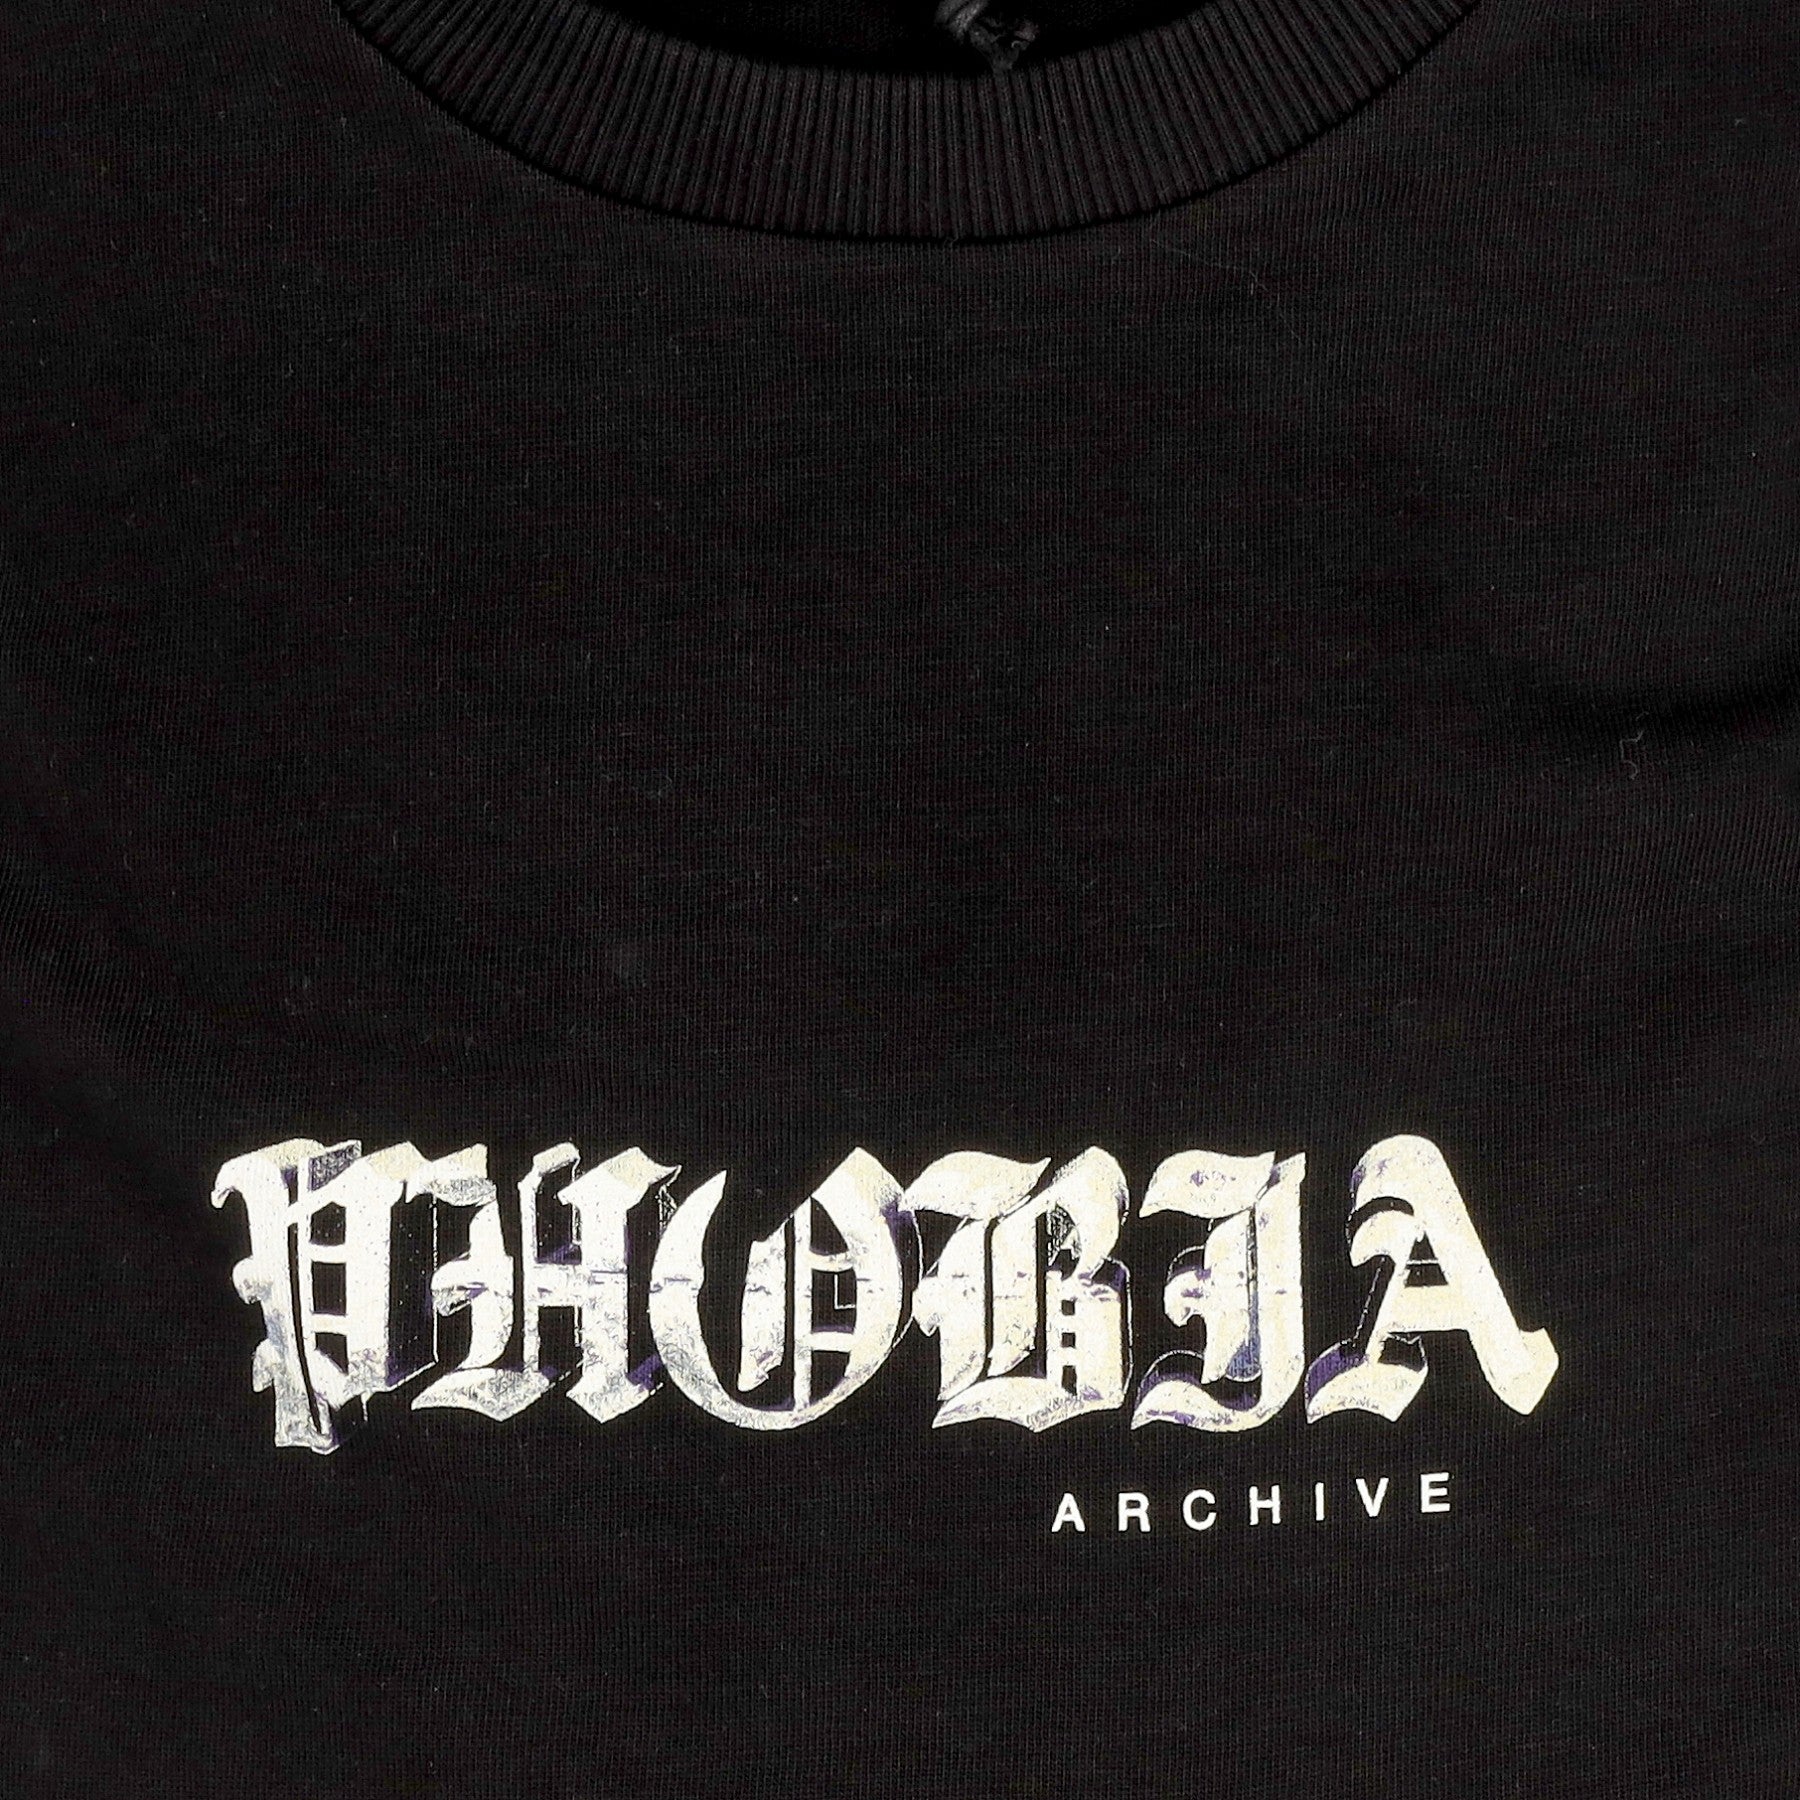 Phobia, Maglietta Uomo Lightning Tee, 